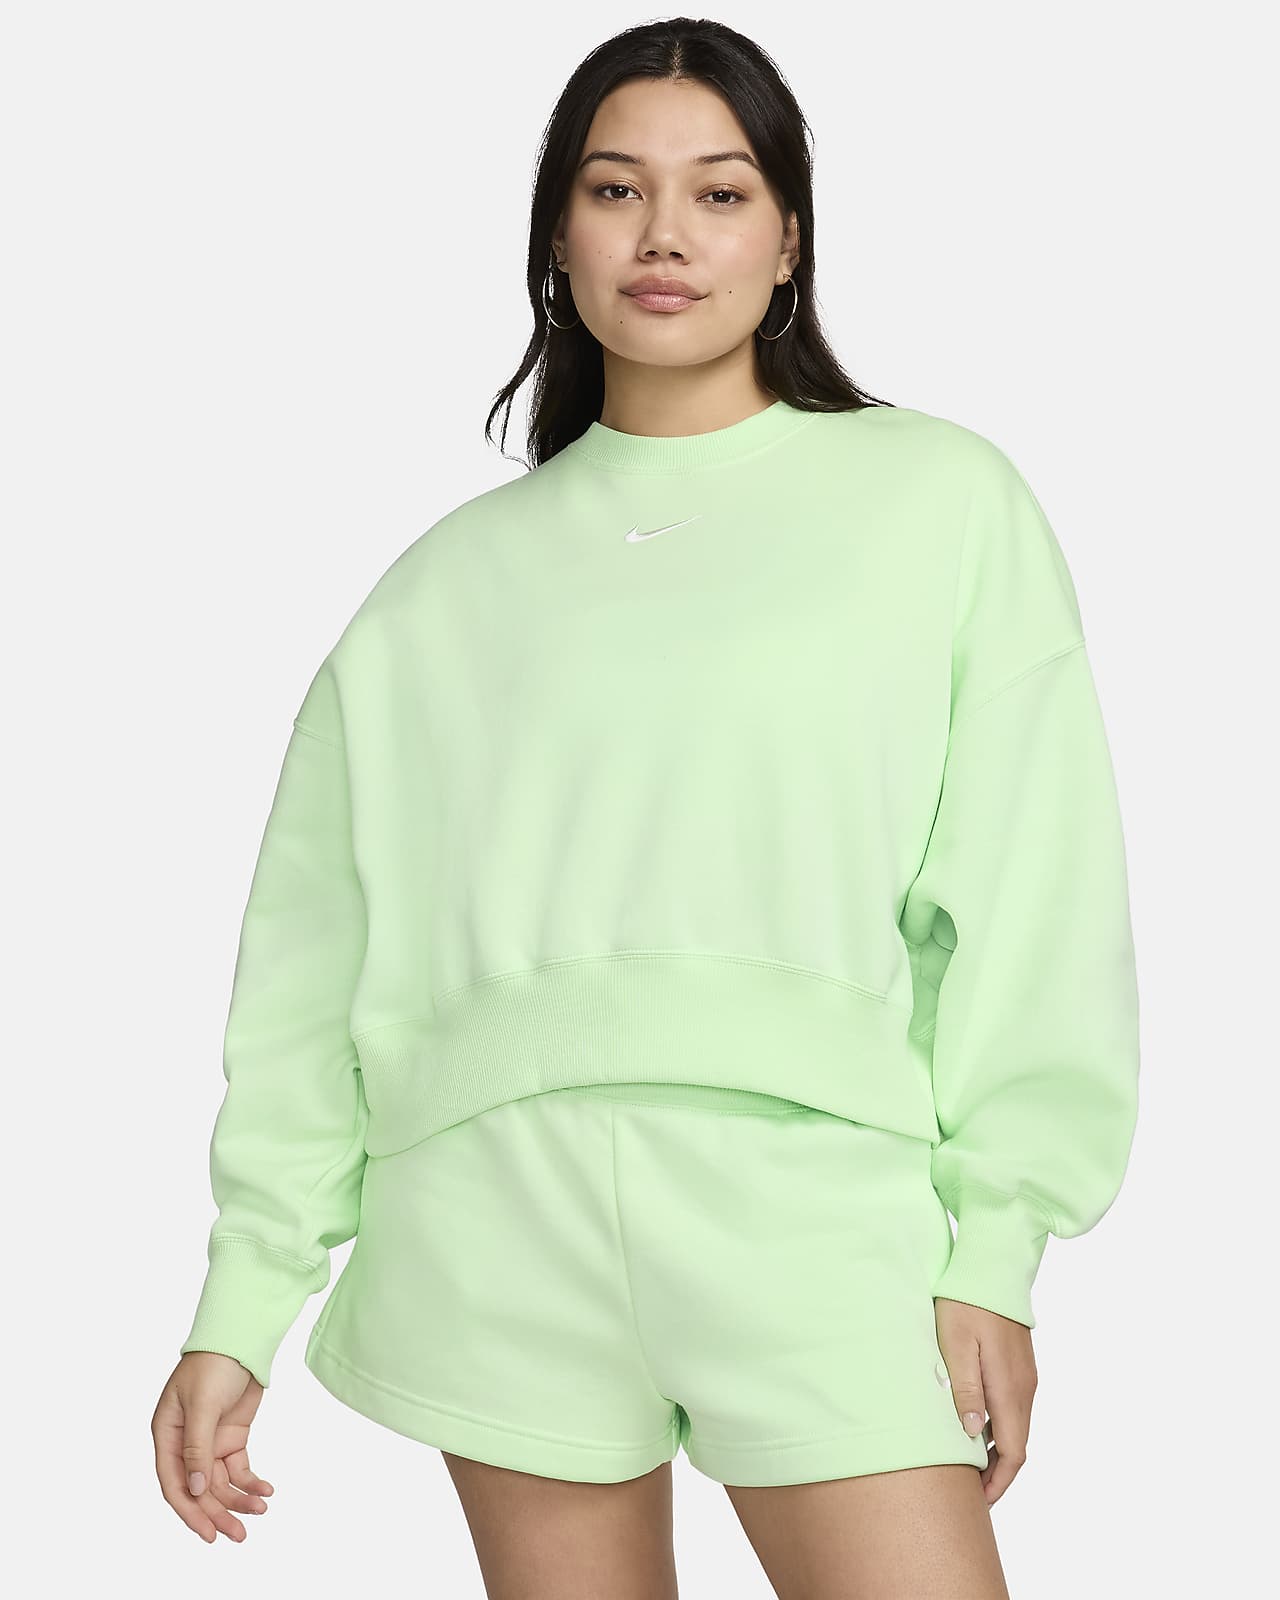 Sweatshirt de gola redonda extremamente folgada Nike Sportswear Phoenix Fleece para mulher